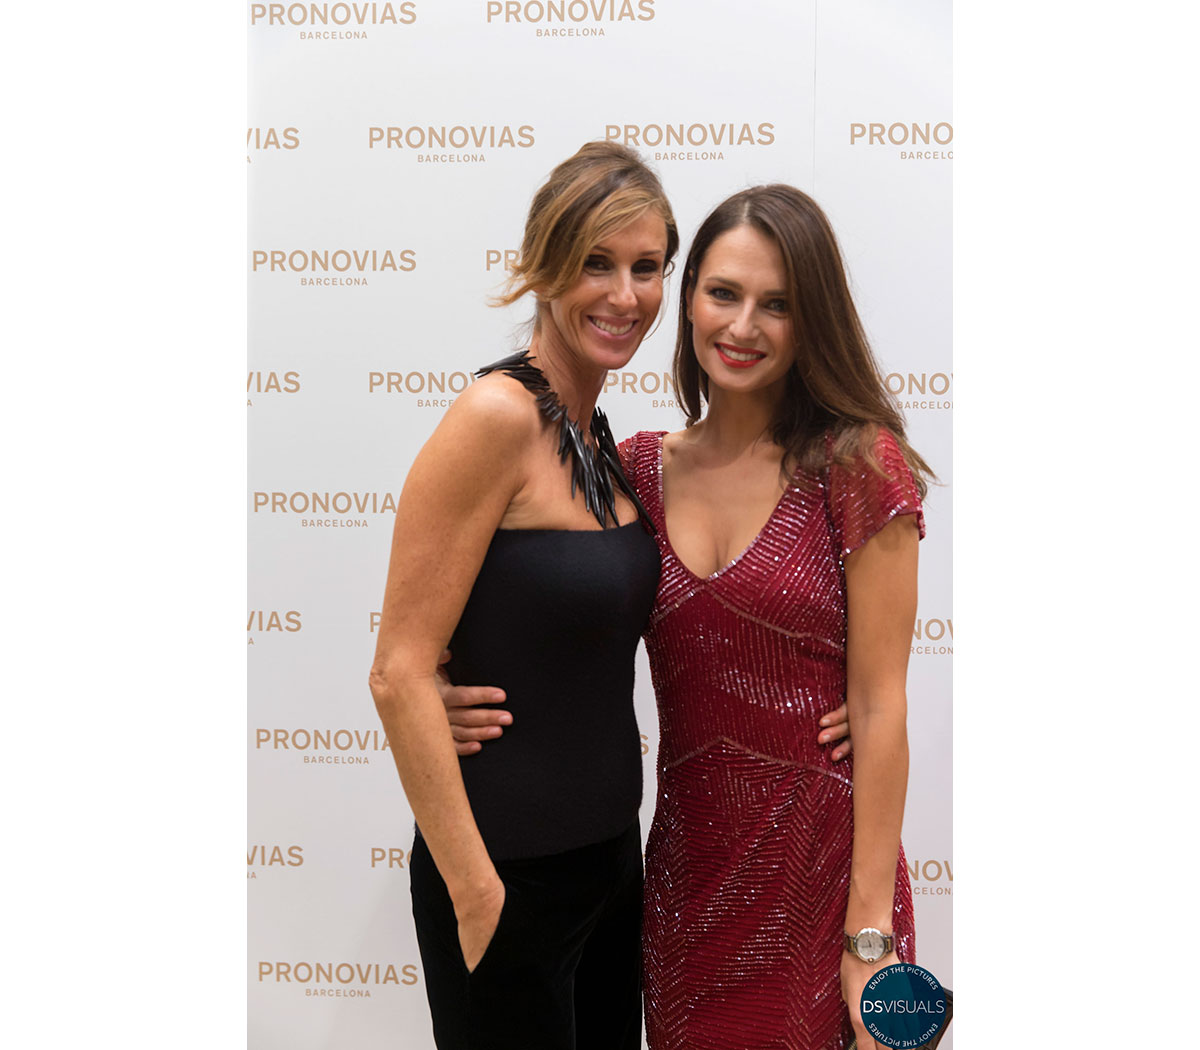 Anna Safroncick and Ilaria de Grenet, Opening of the Pronovias boutique, Rome, Italy | Ilaria de Grenet • Comunicazione ed Eventi | Finest Residences